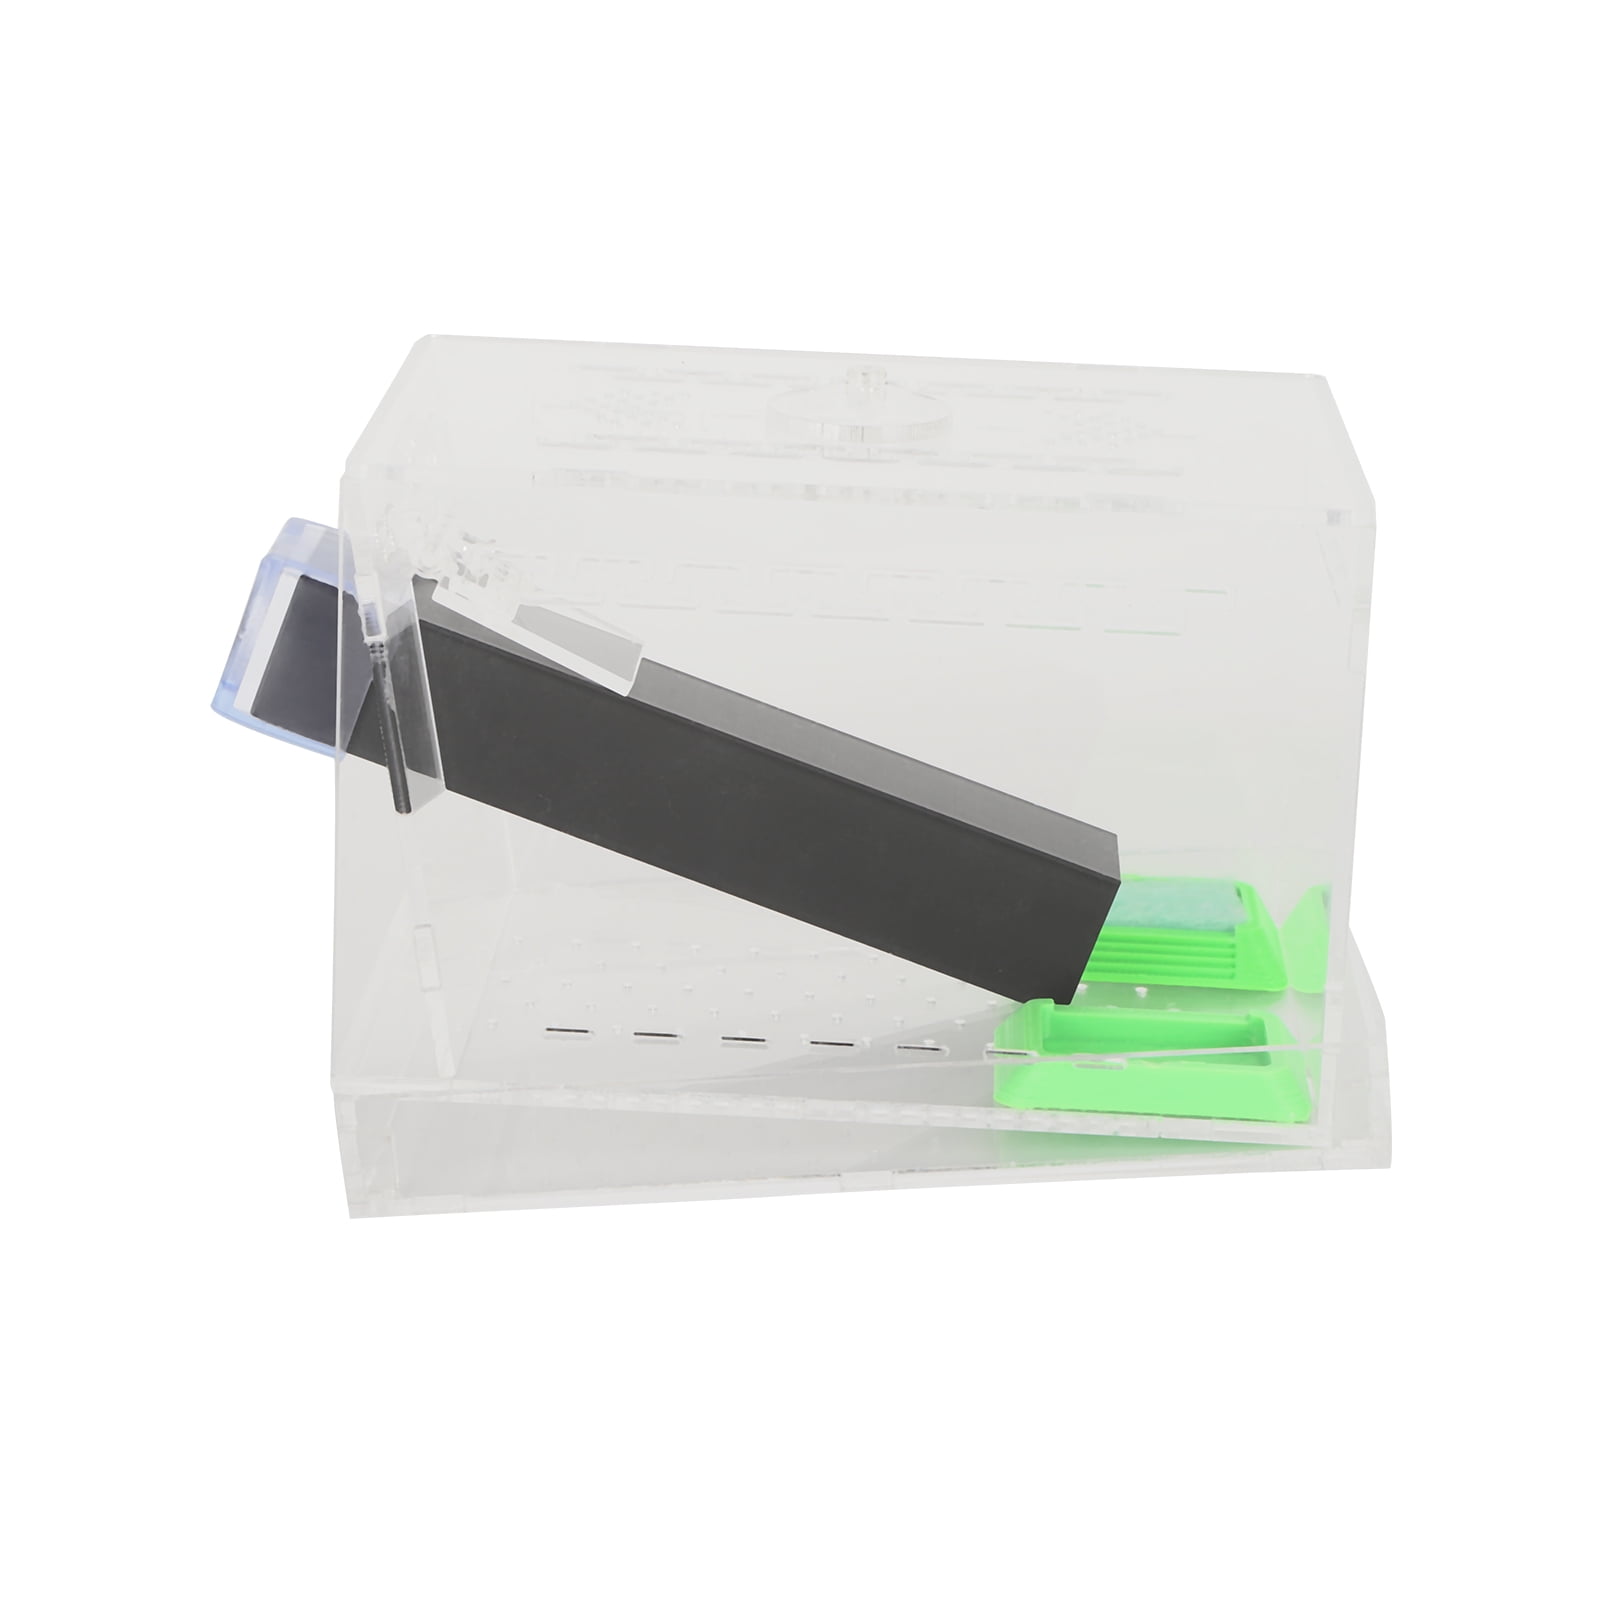 Medium Cricket Pen Kricket Keeper Reptile Green Plastic Clear No Dispenser  Tubes